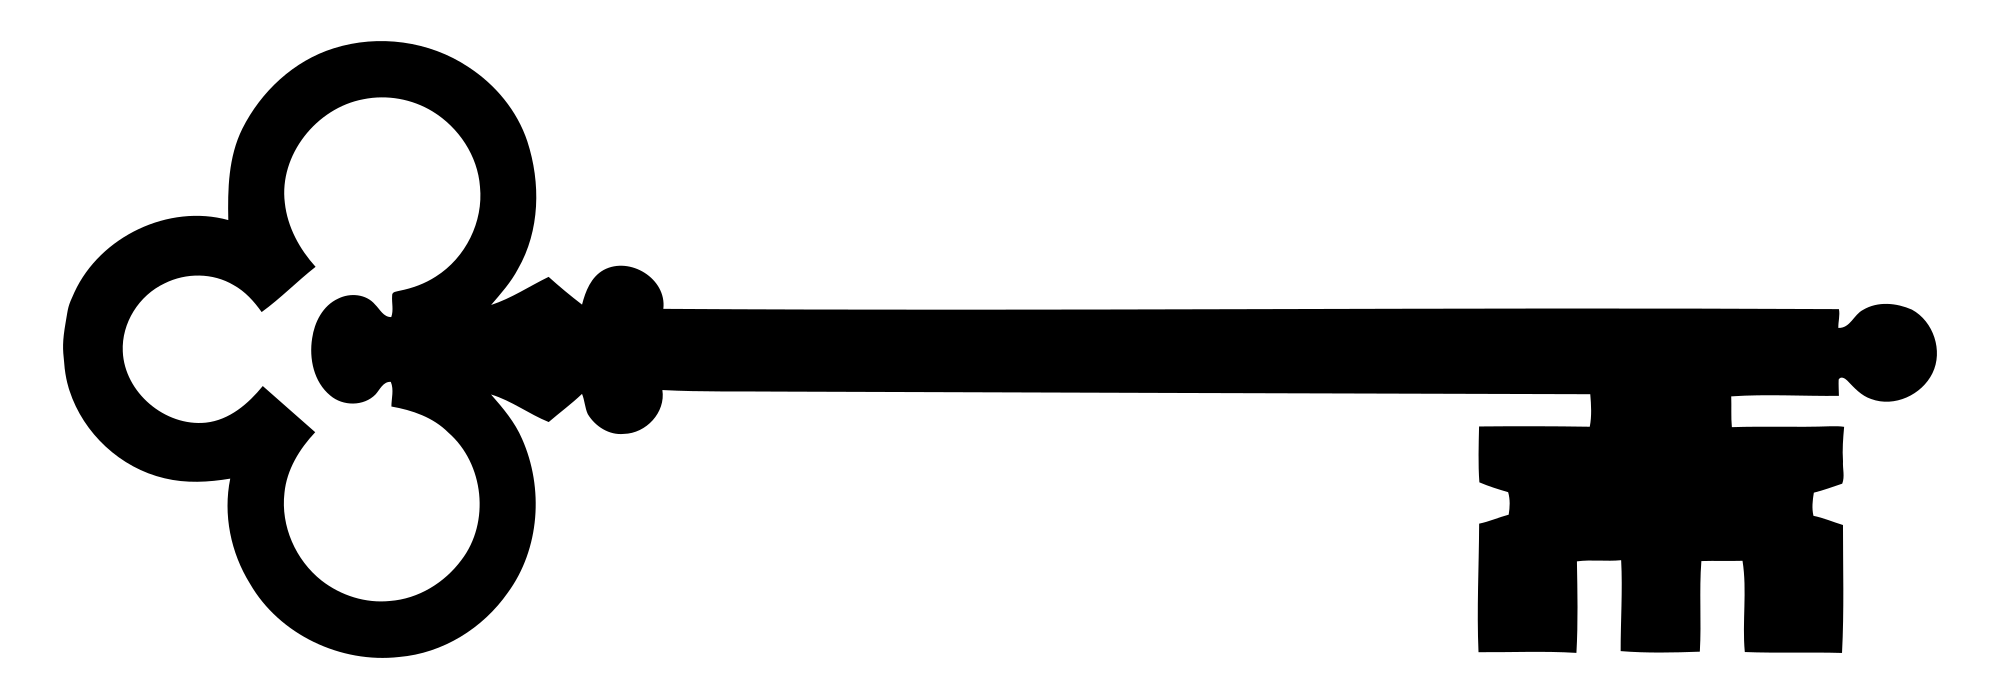 Black key icon